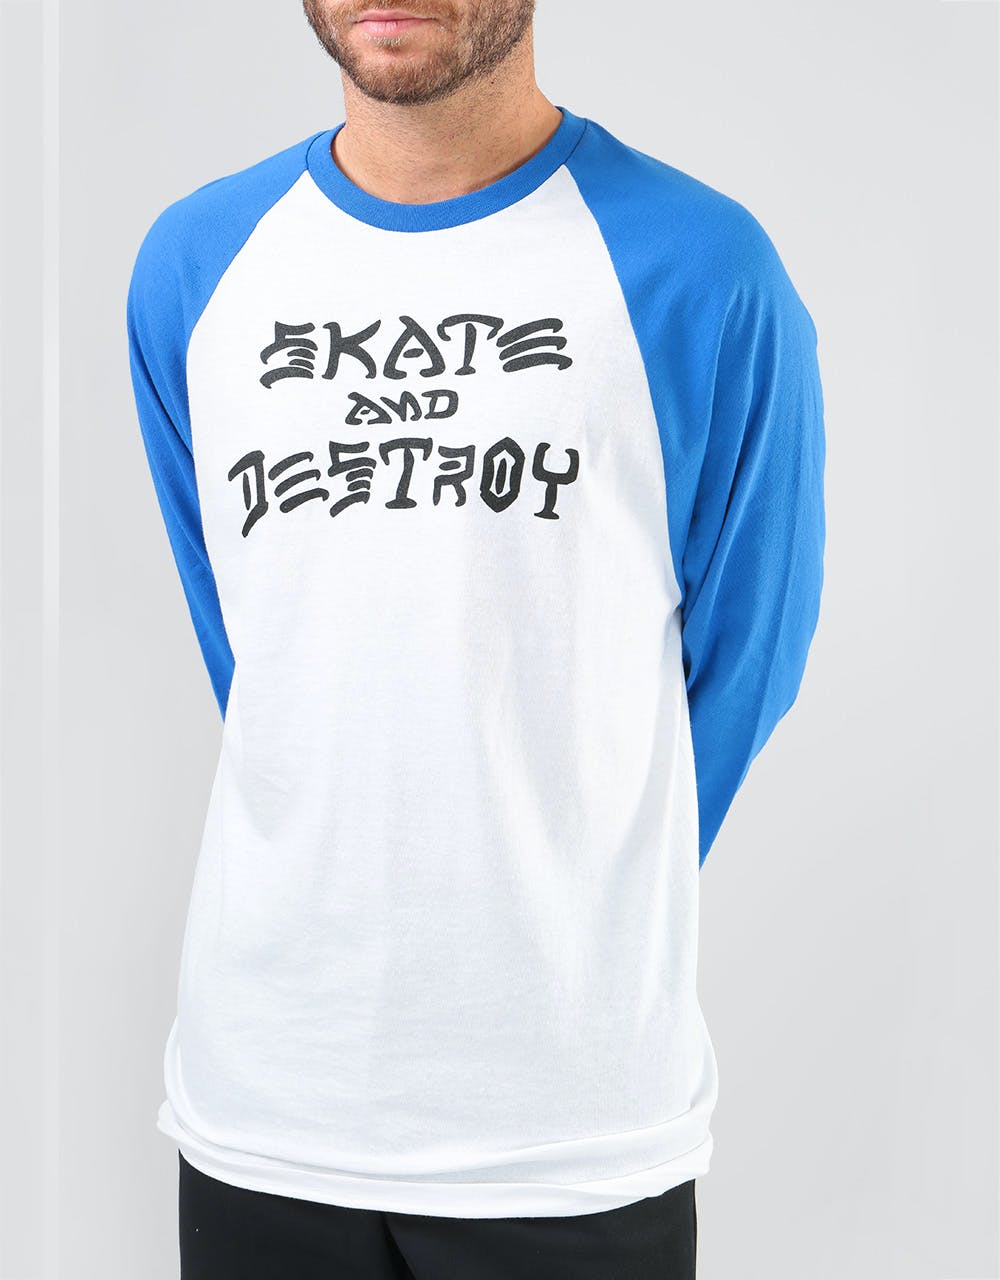 Thrasher Skate and Destroy Raglan T-Shirt - White/Blue